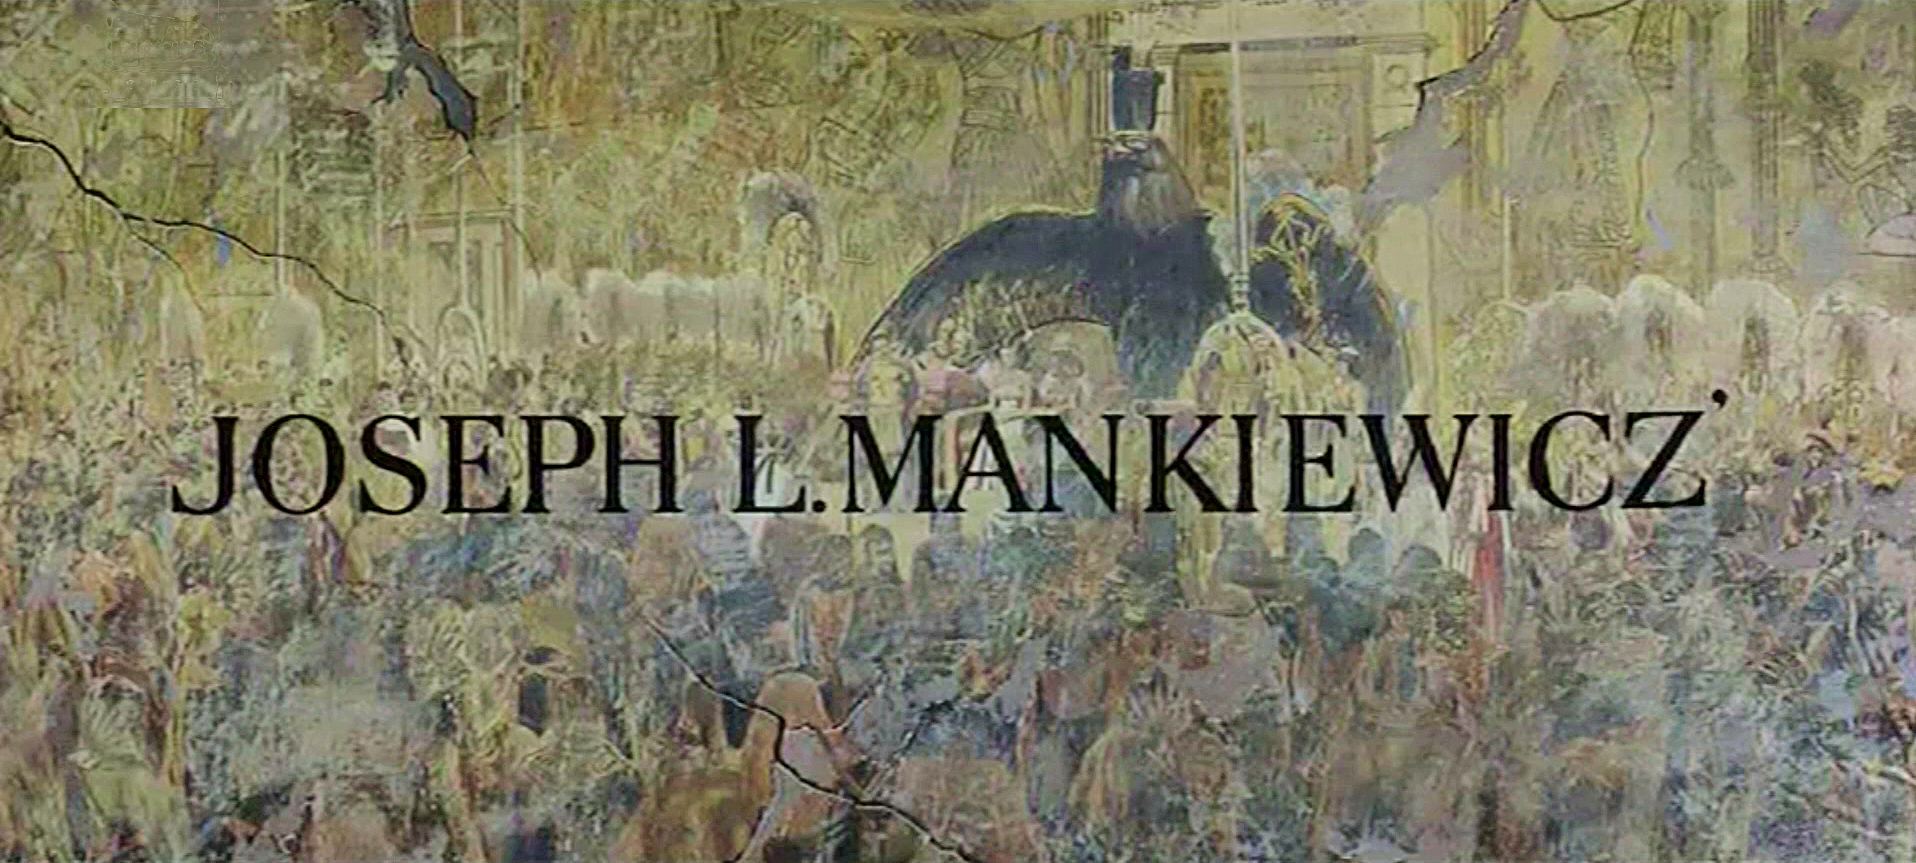 Main title from Cleopatra (1963) (2). Joseph L Mankiewicz'